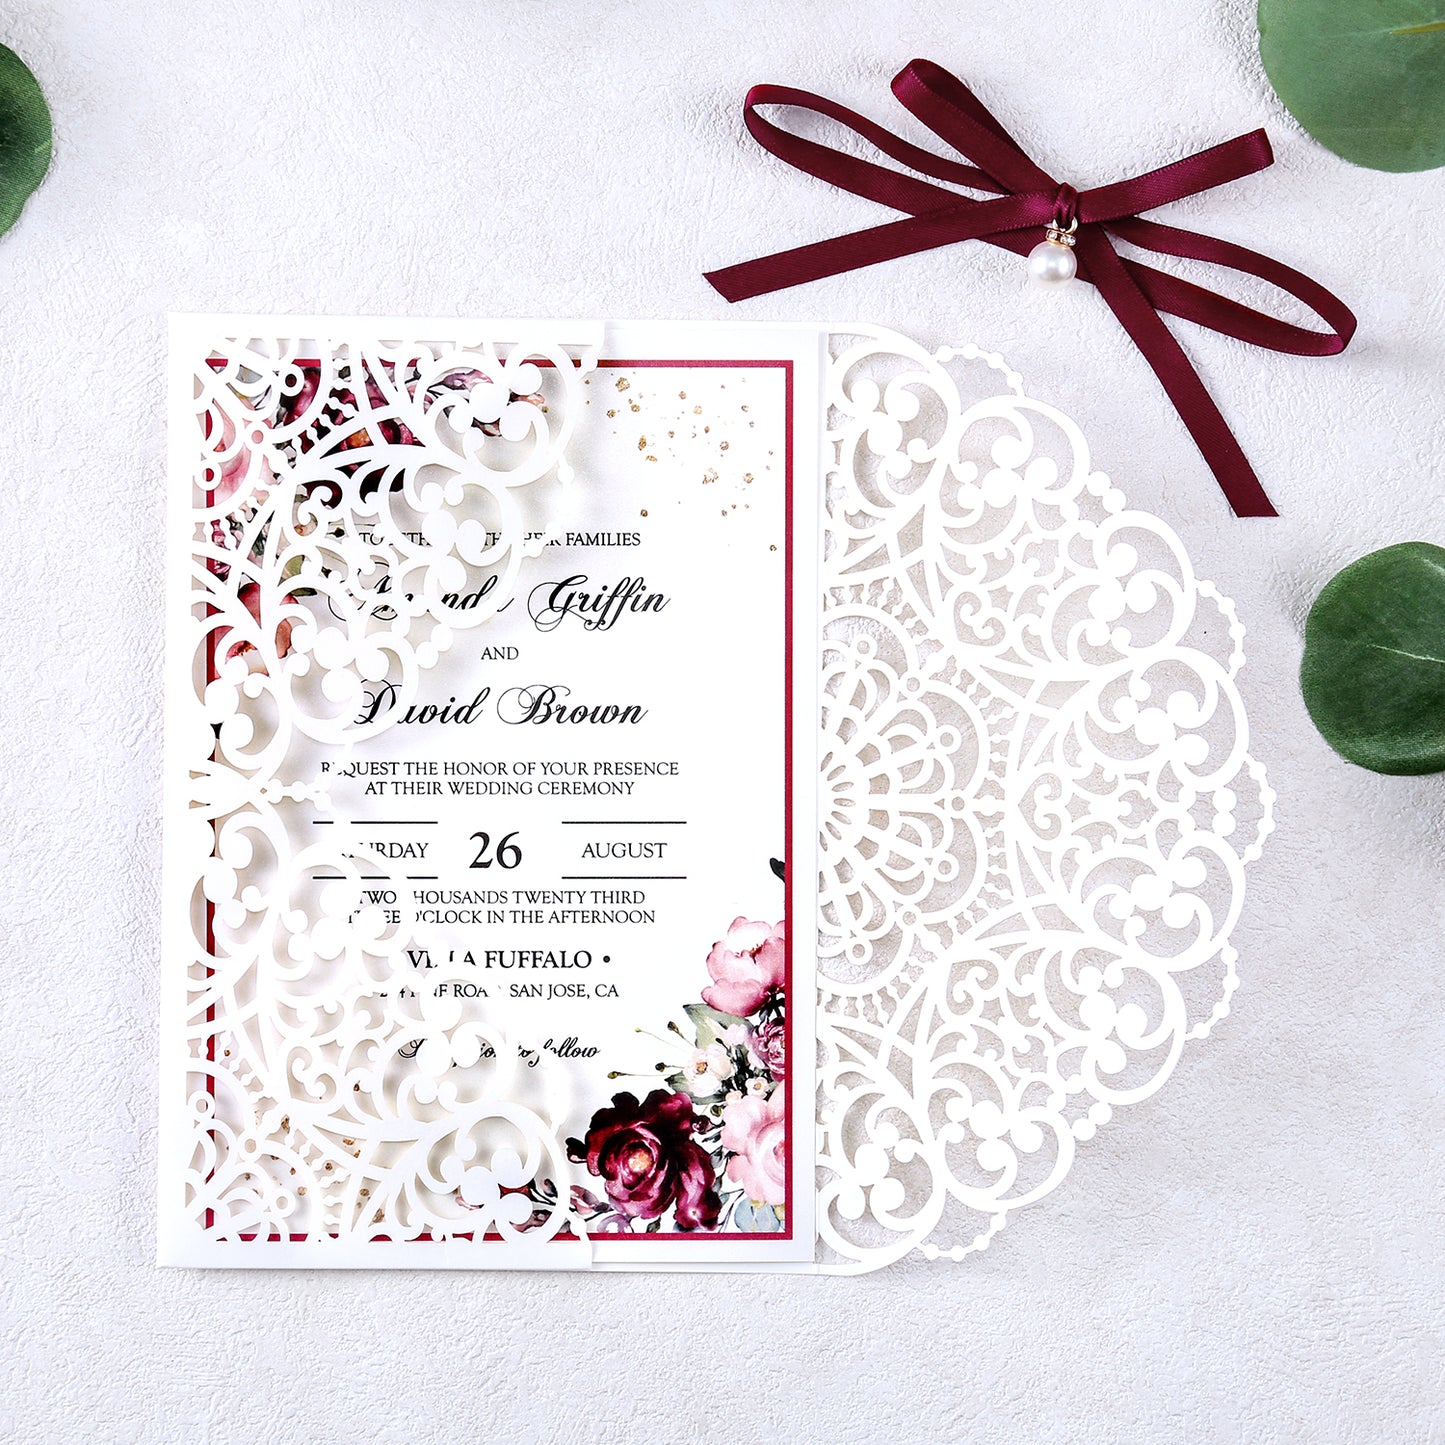 5 X 7.2" Laser Cut Hollow Rose Wedding invitations Cards With Burgundy Ribbon And Envelopes For Wedding Bridal Shower Engagement - DorisHome